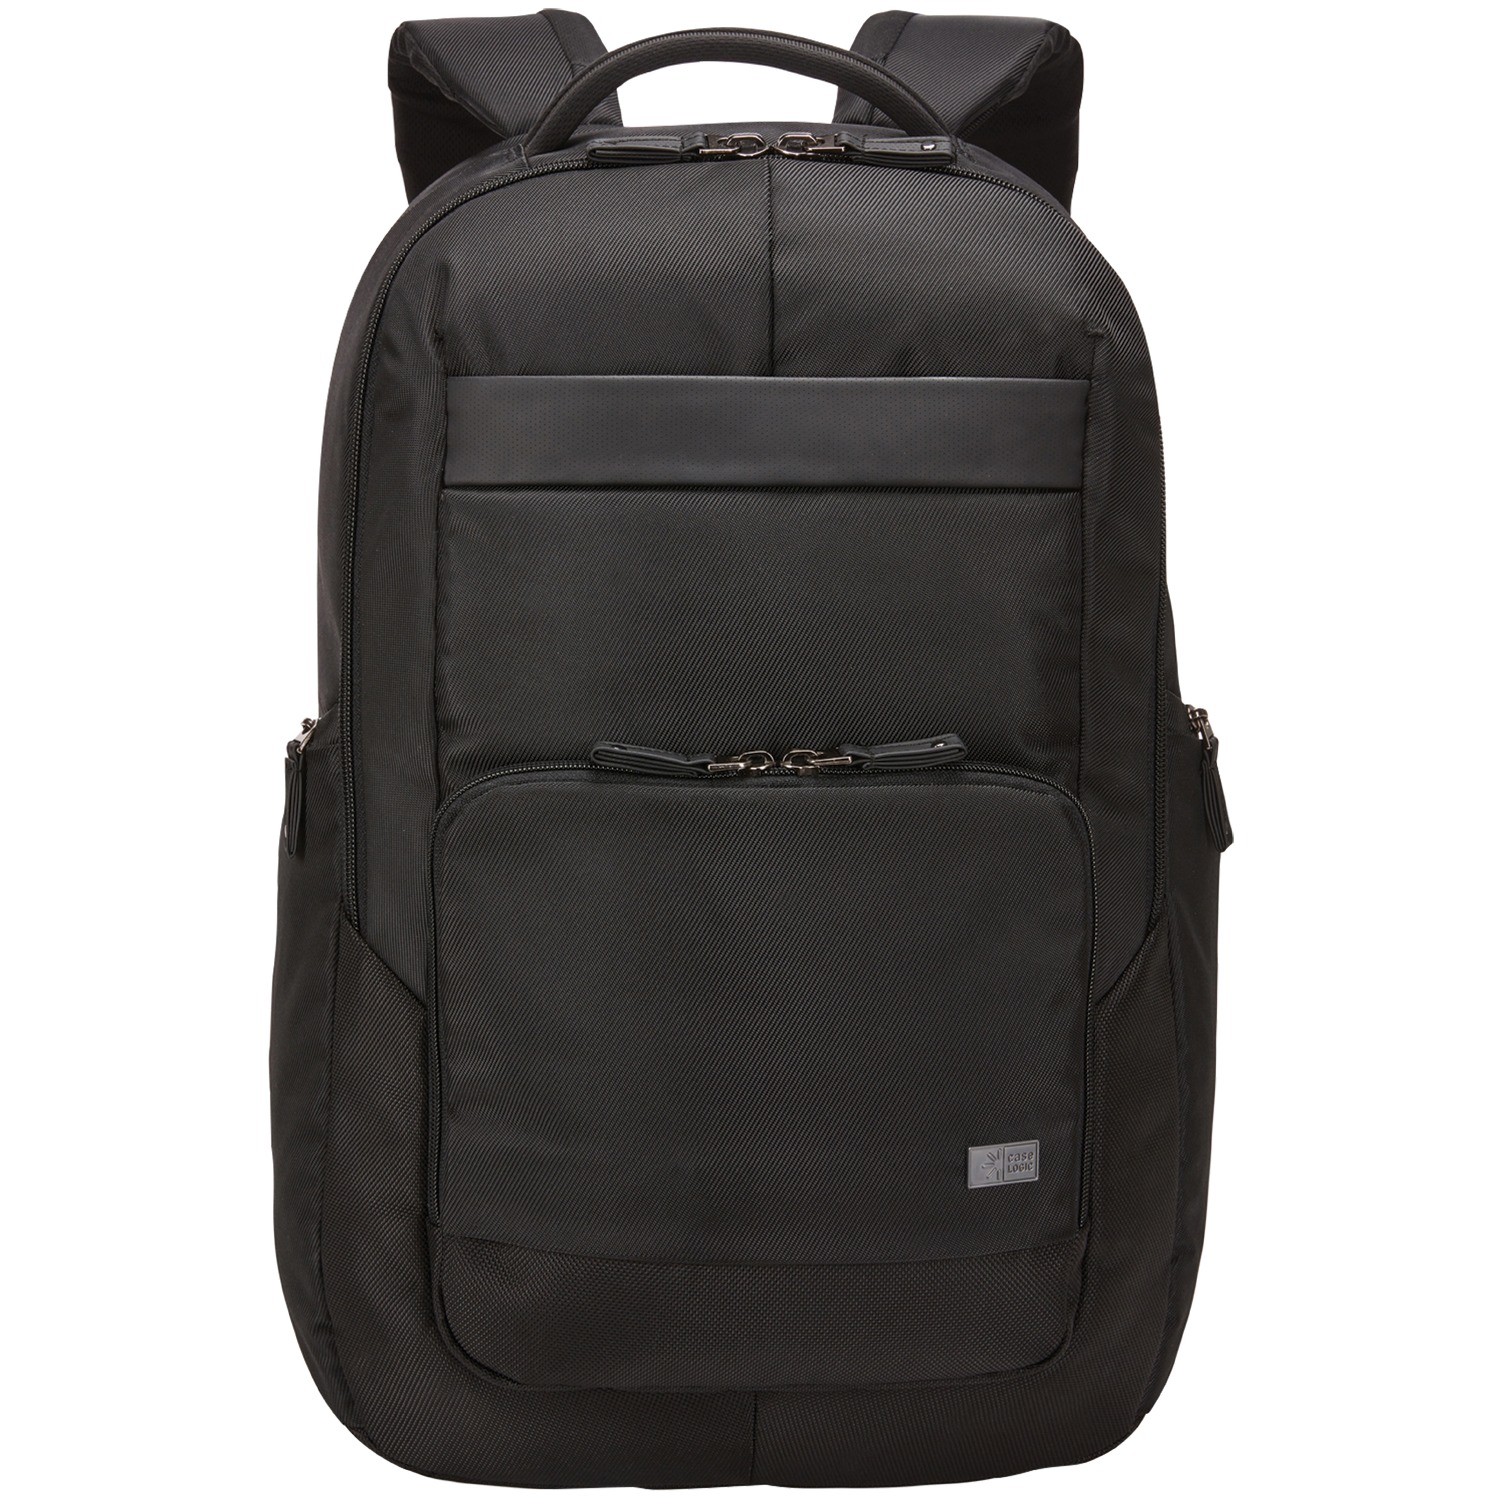 Notion 15.6" Laptop Backpack